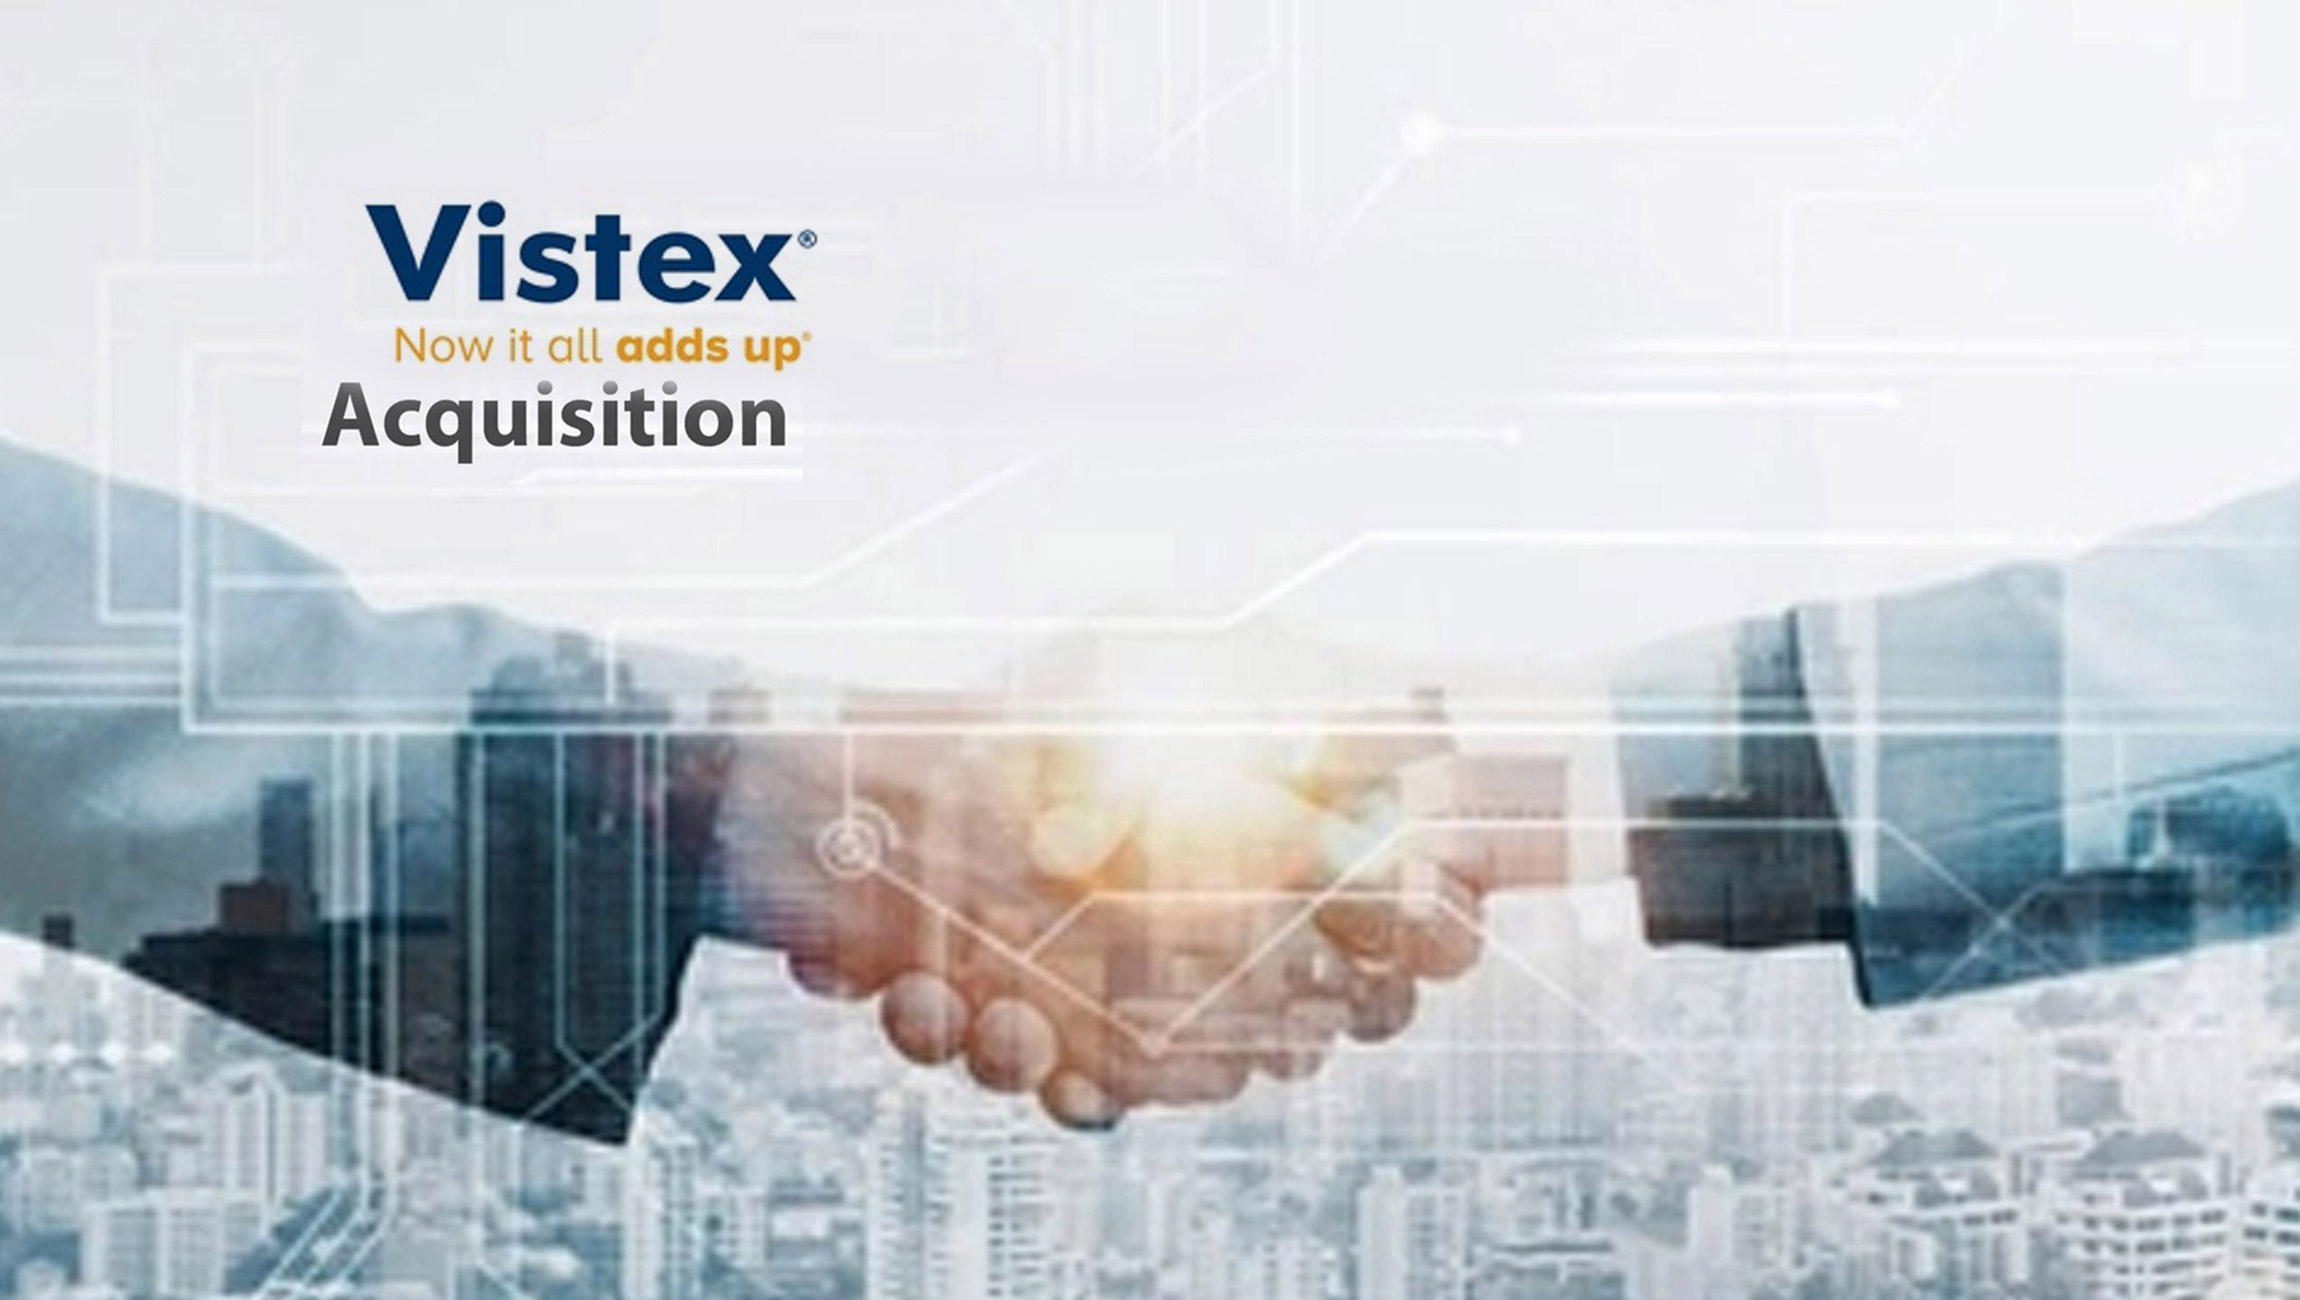 Vistex Forays into Big Data, Announces Acquisition of Webdata Solutions GmbH